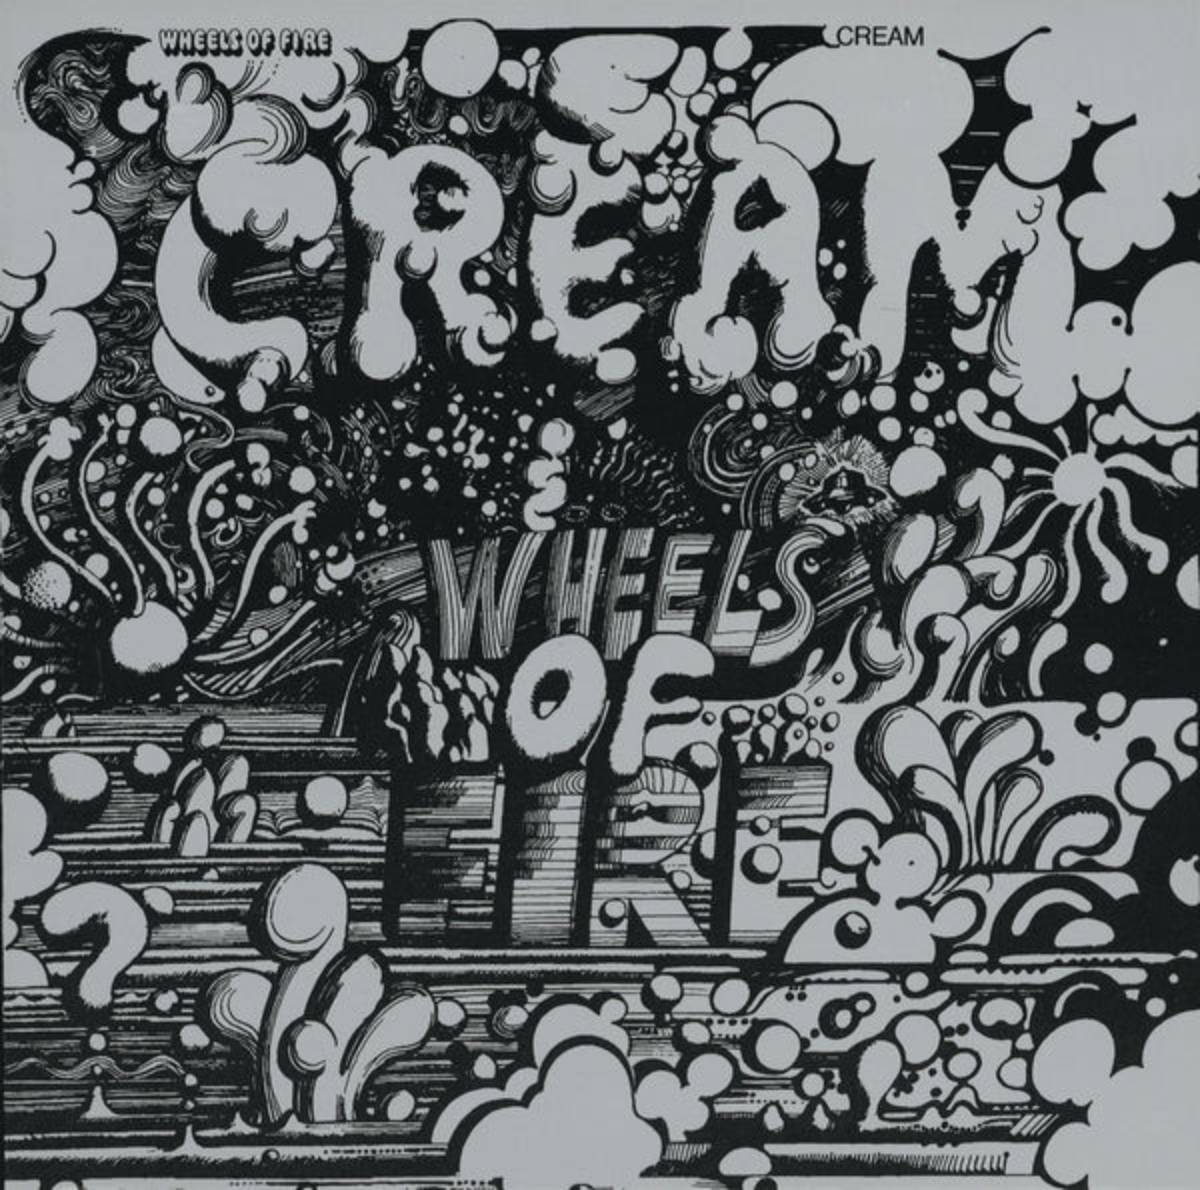 Cream - Wheels Of Fire (1968)